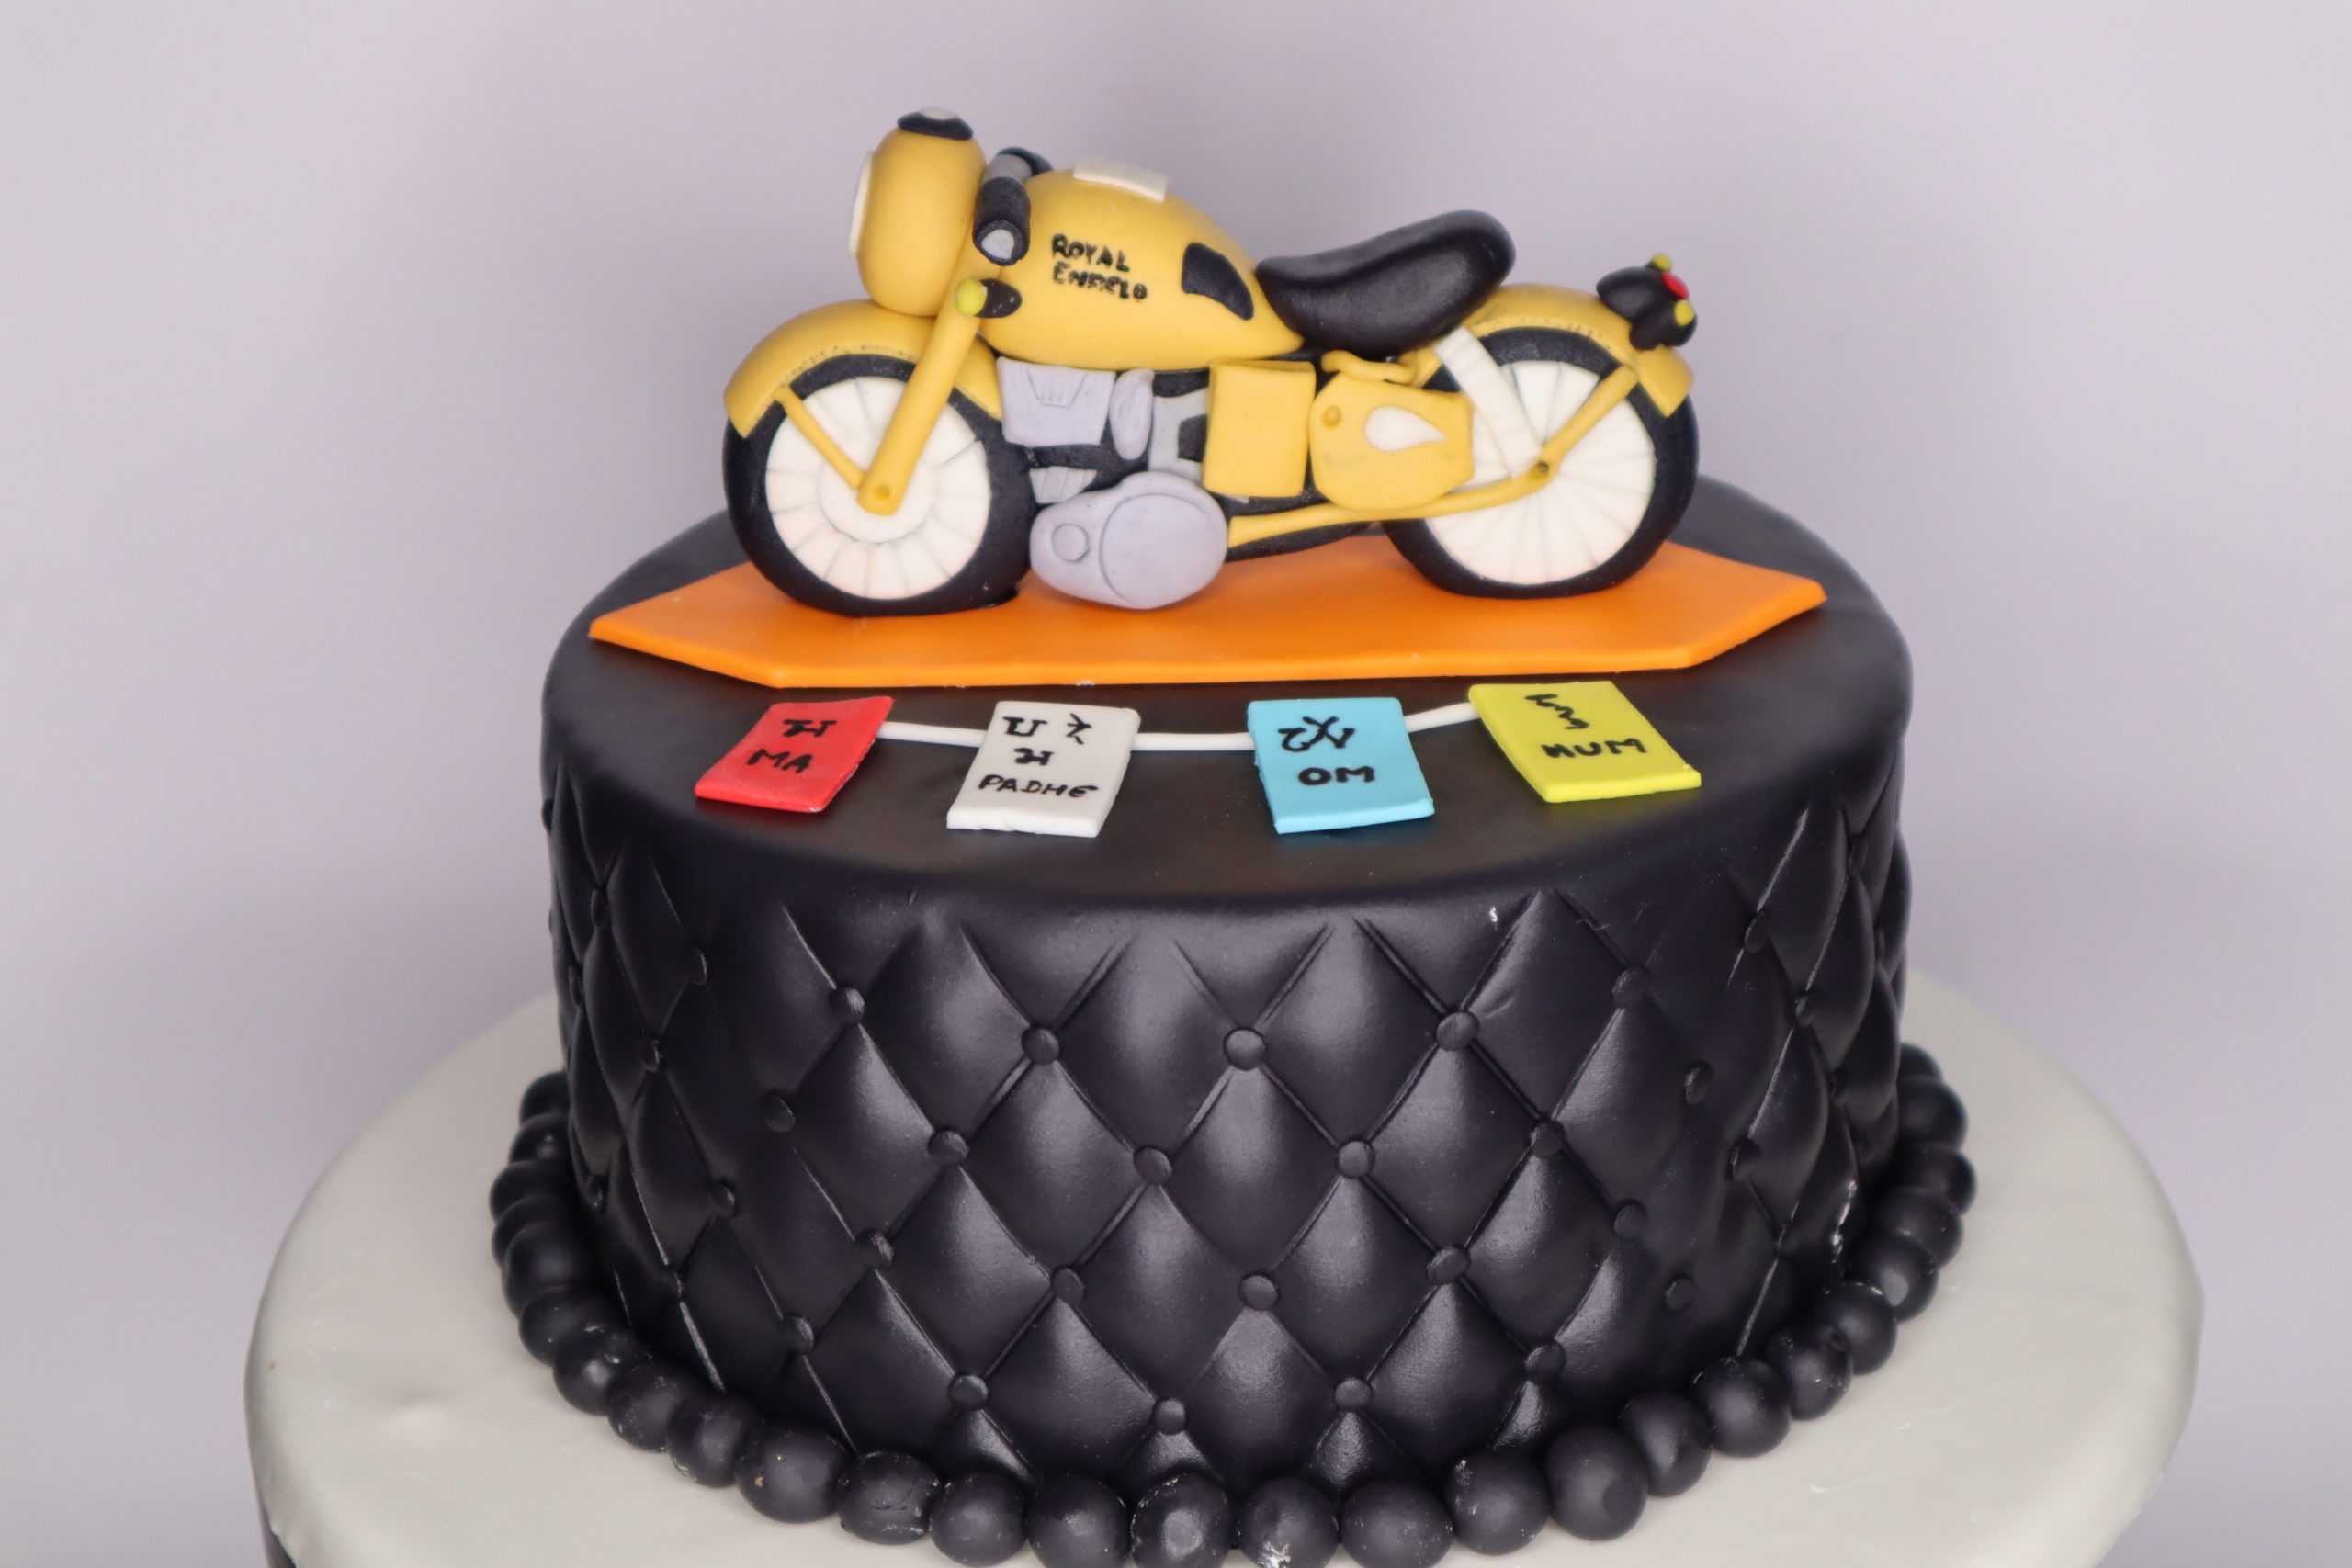 Buy/Send Sports Bike Theme Cake Online @ Rs. 3989 - SendBestGift